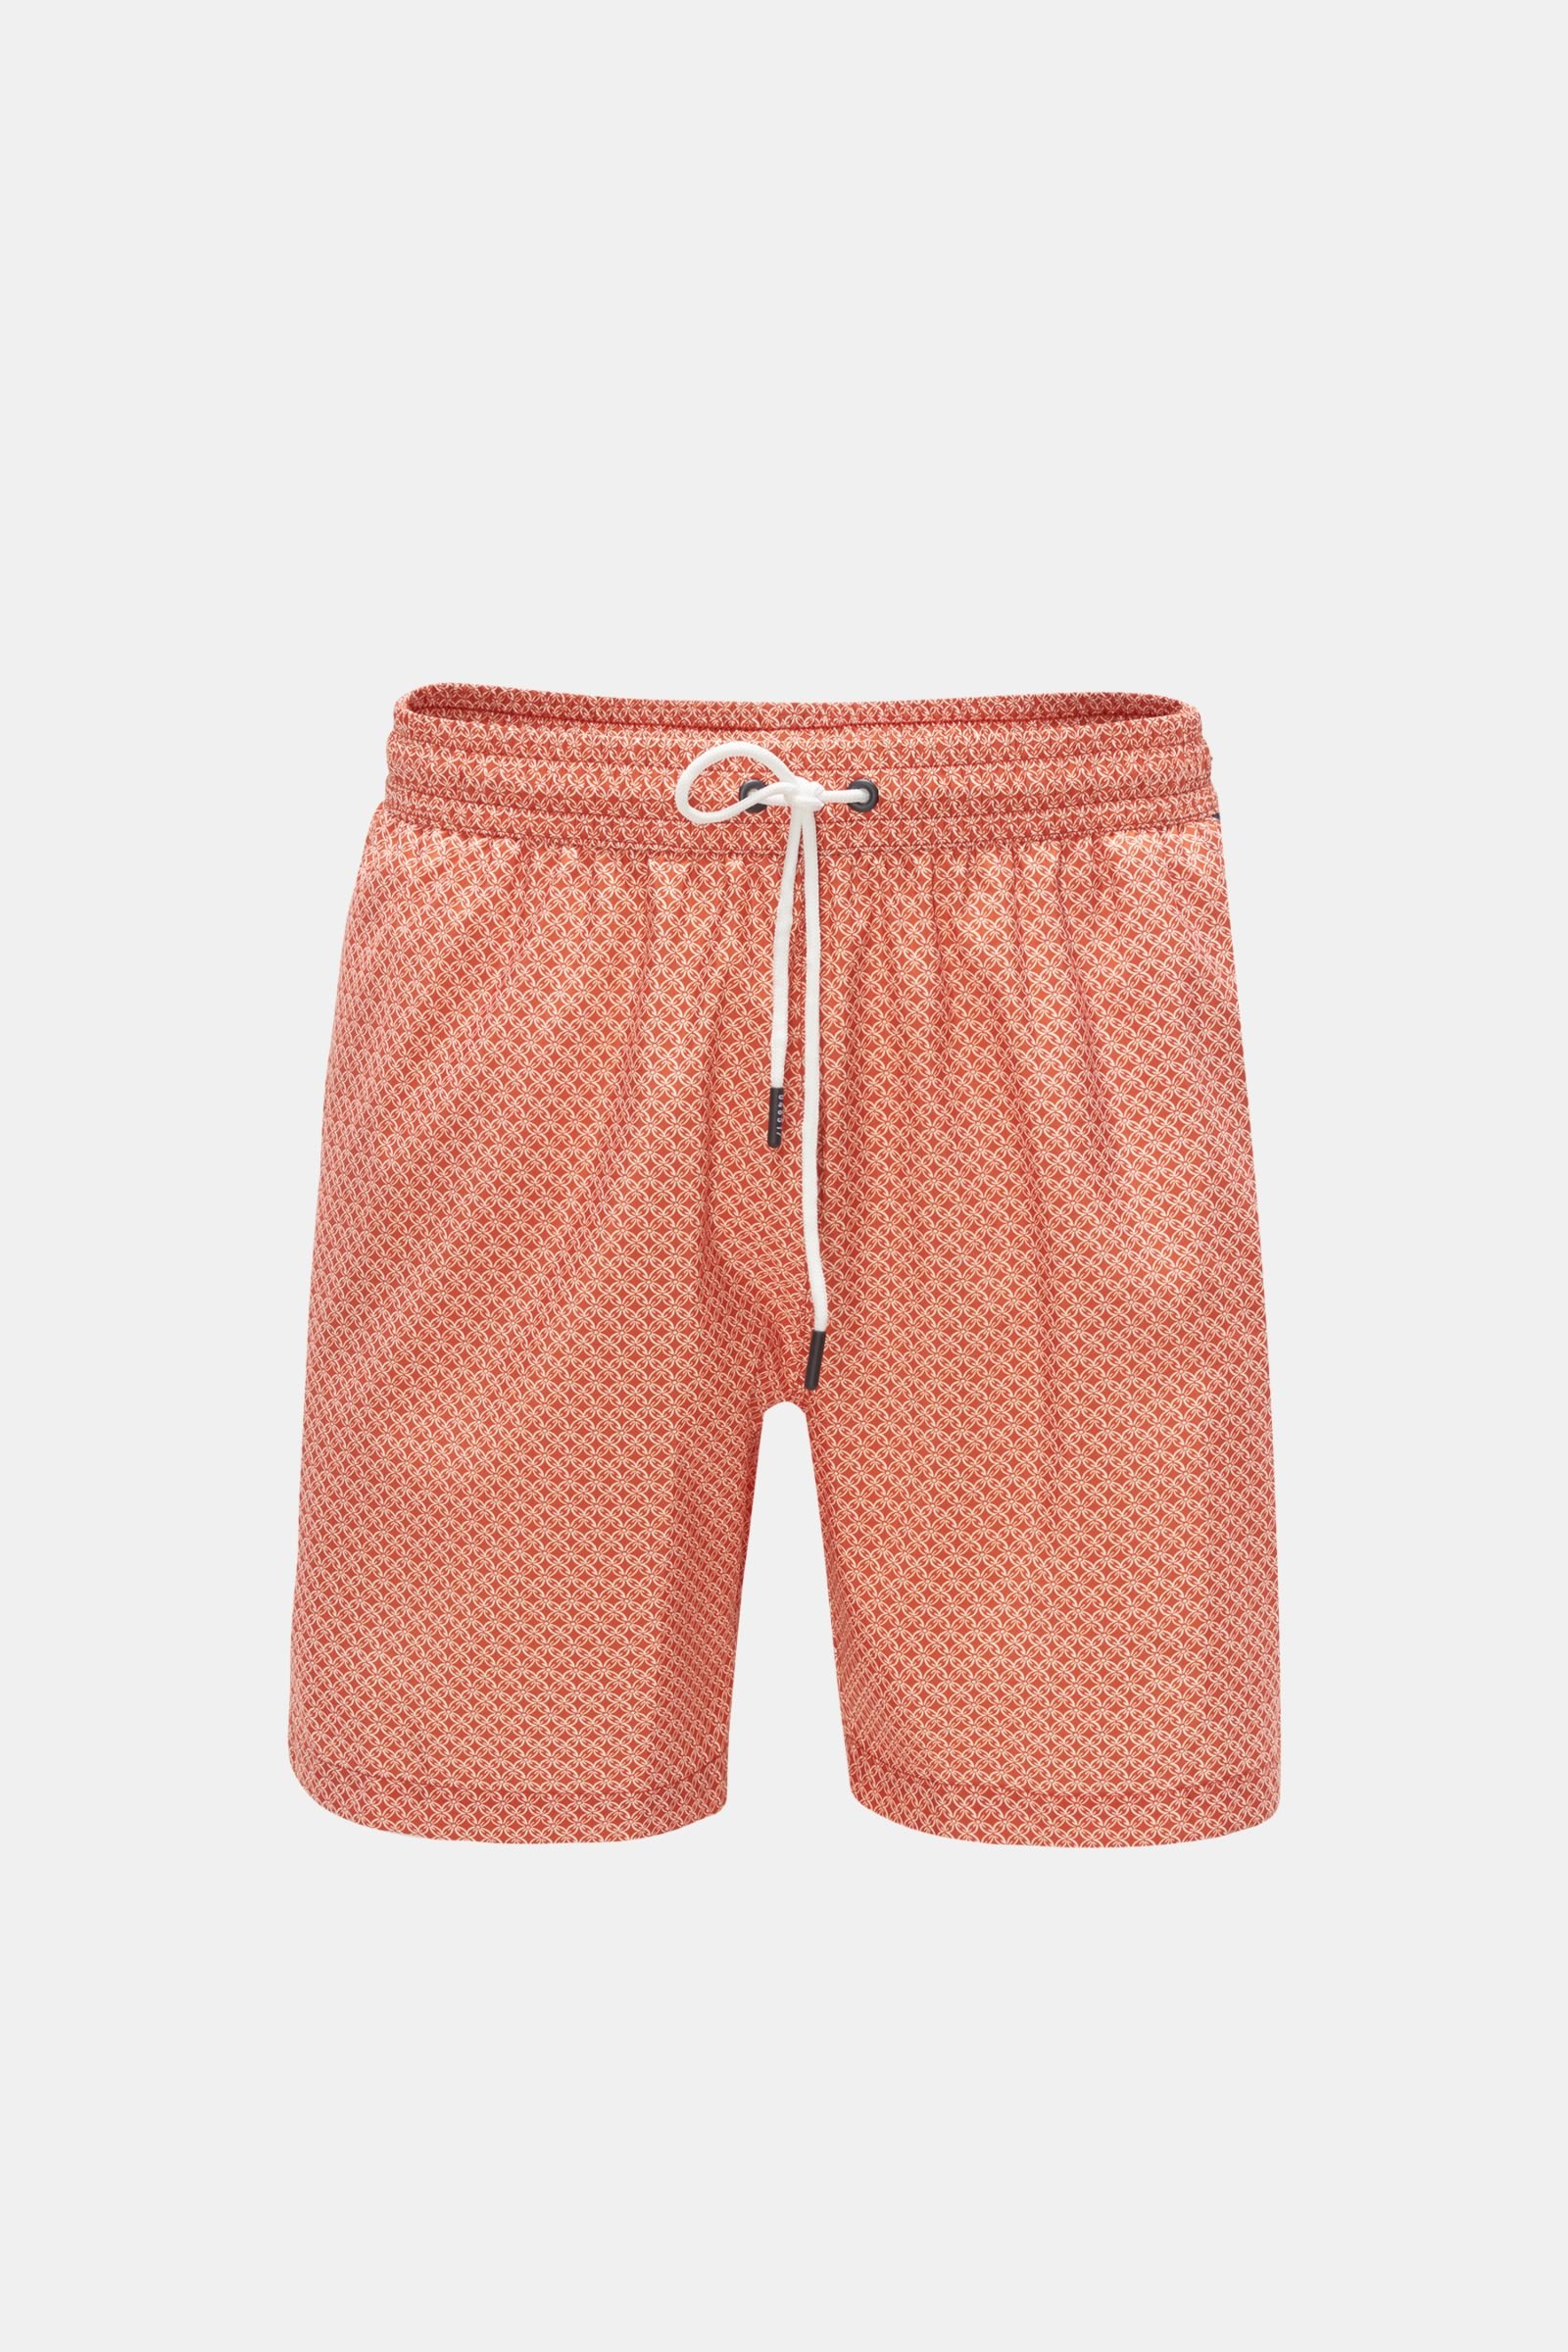 Swim shorts 'Tile Swim' orange/white patterned